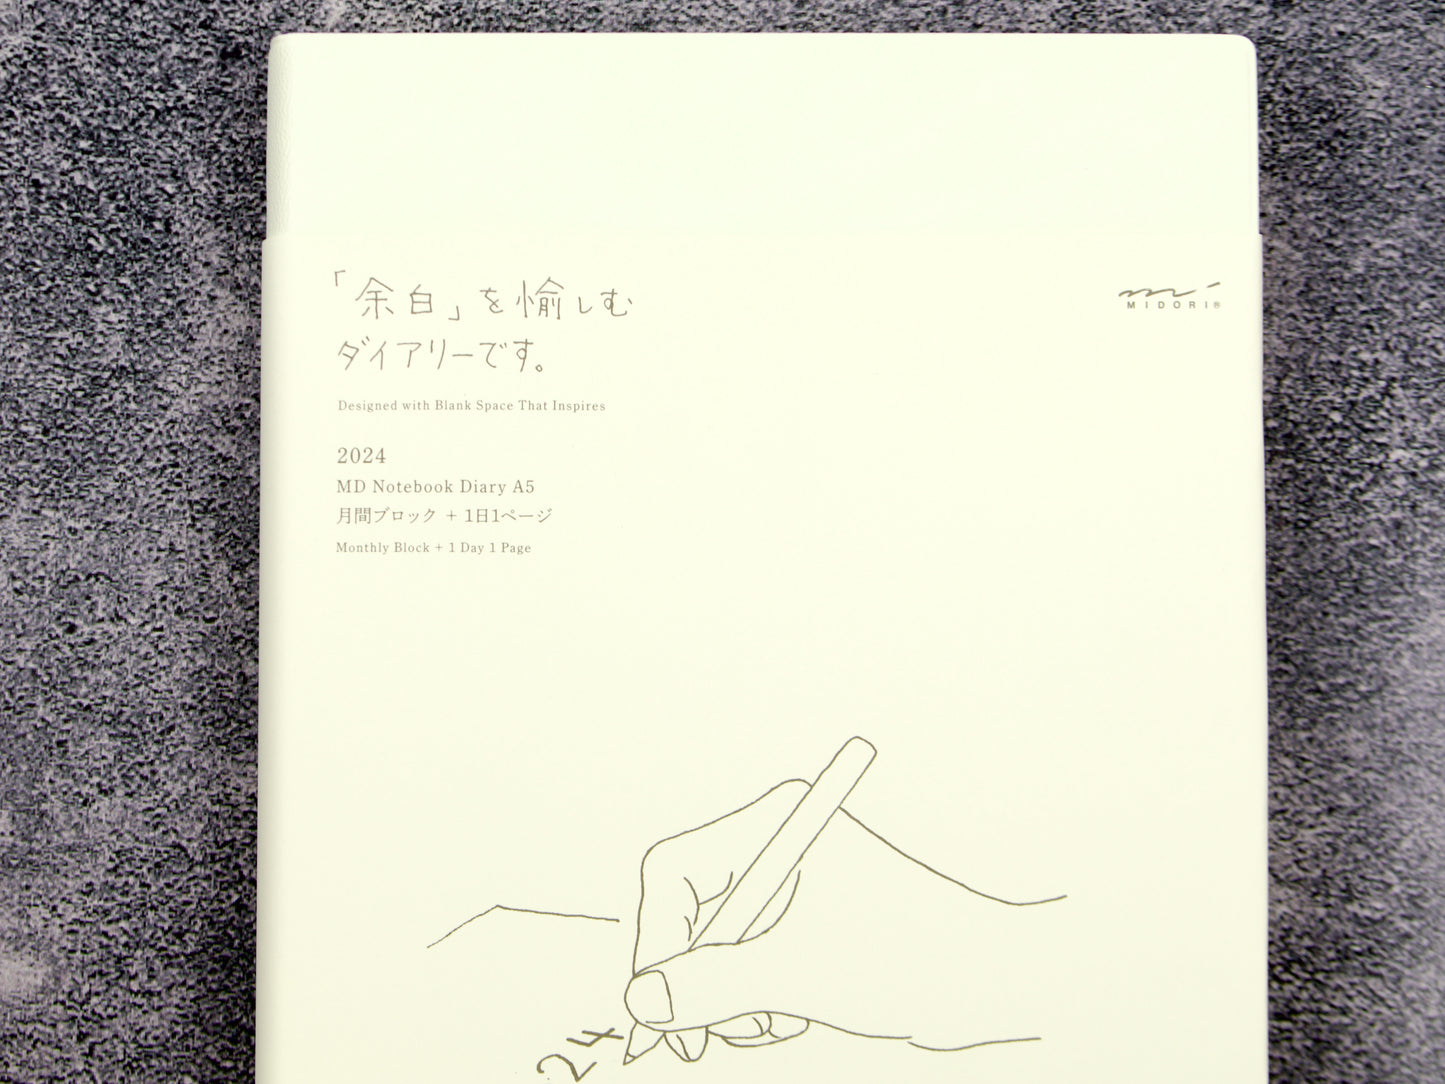 Midori MD Paper 2024 A5 1 Day 1 Page - Tokyo Pen Shop